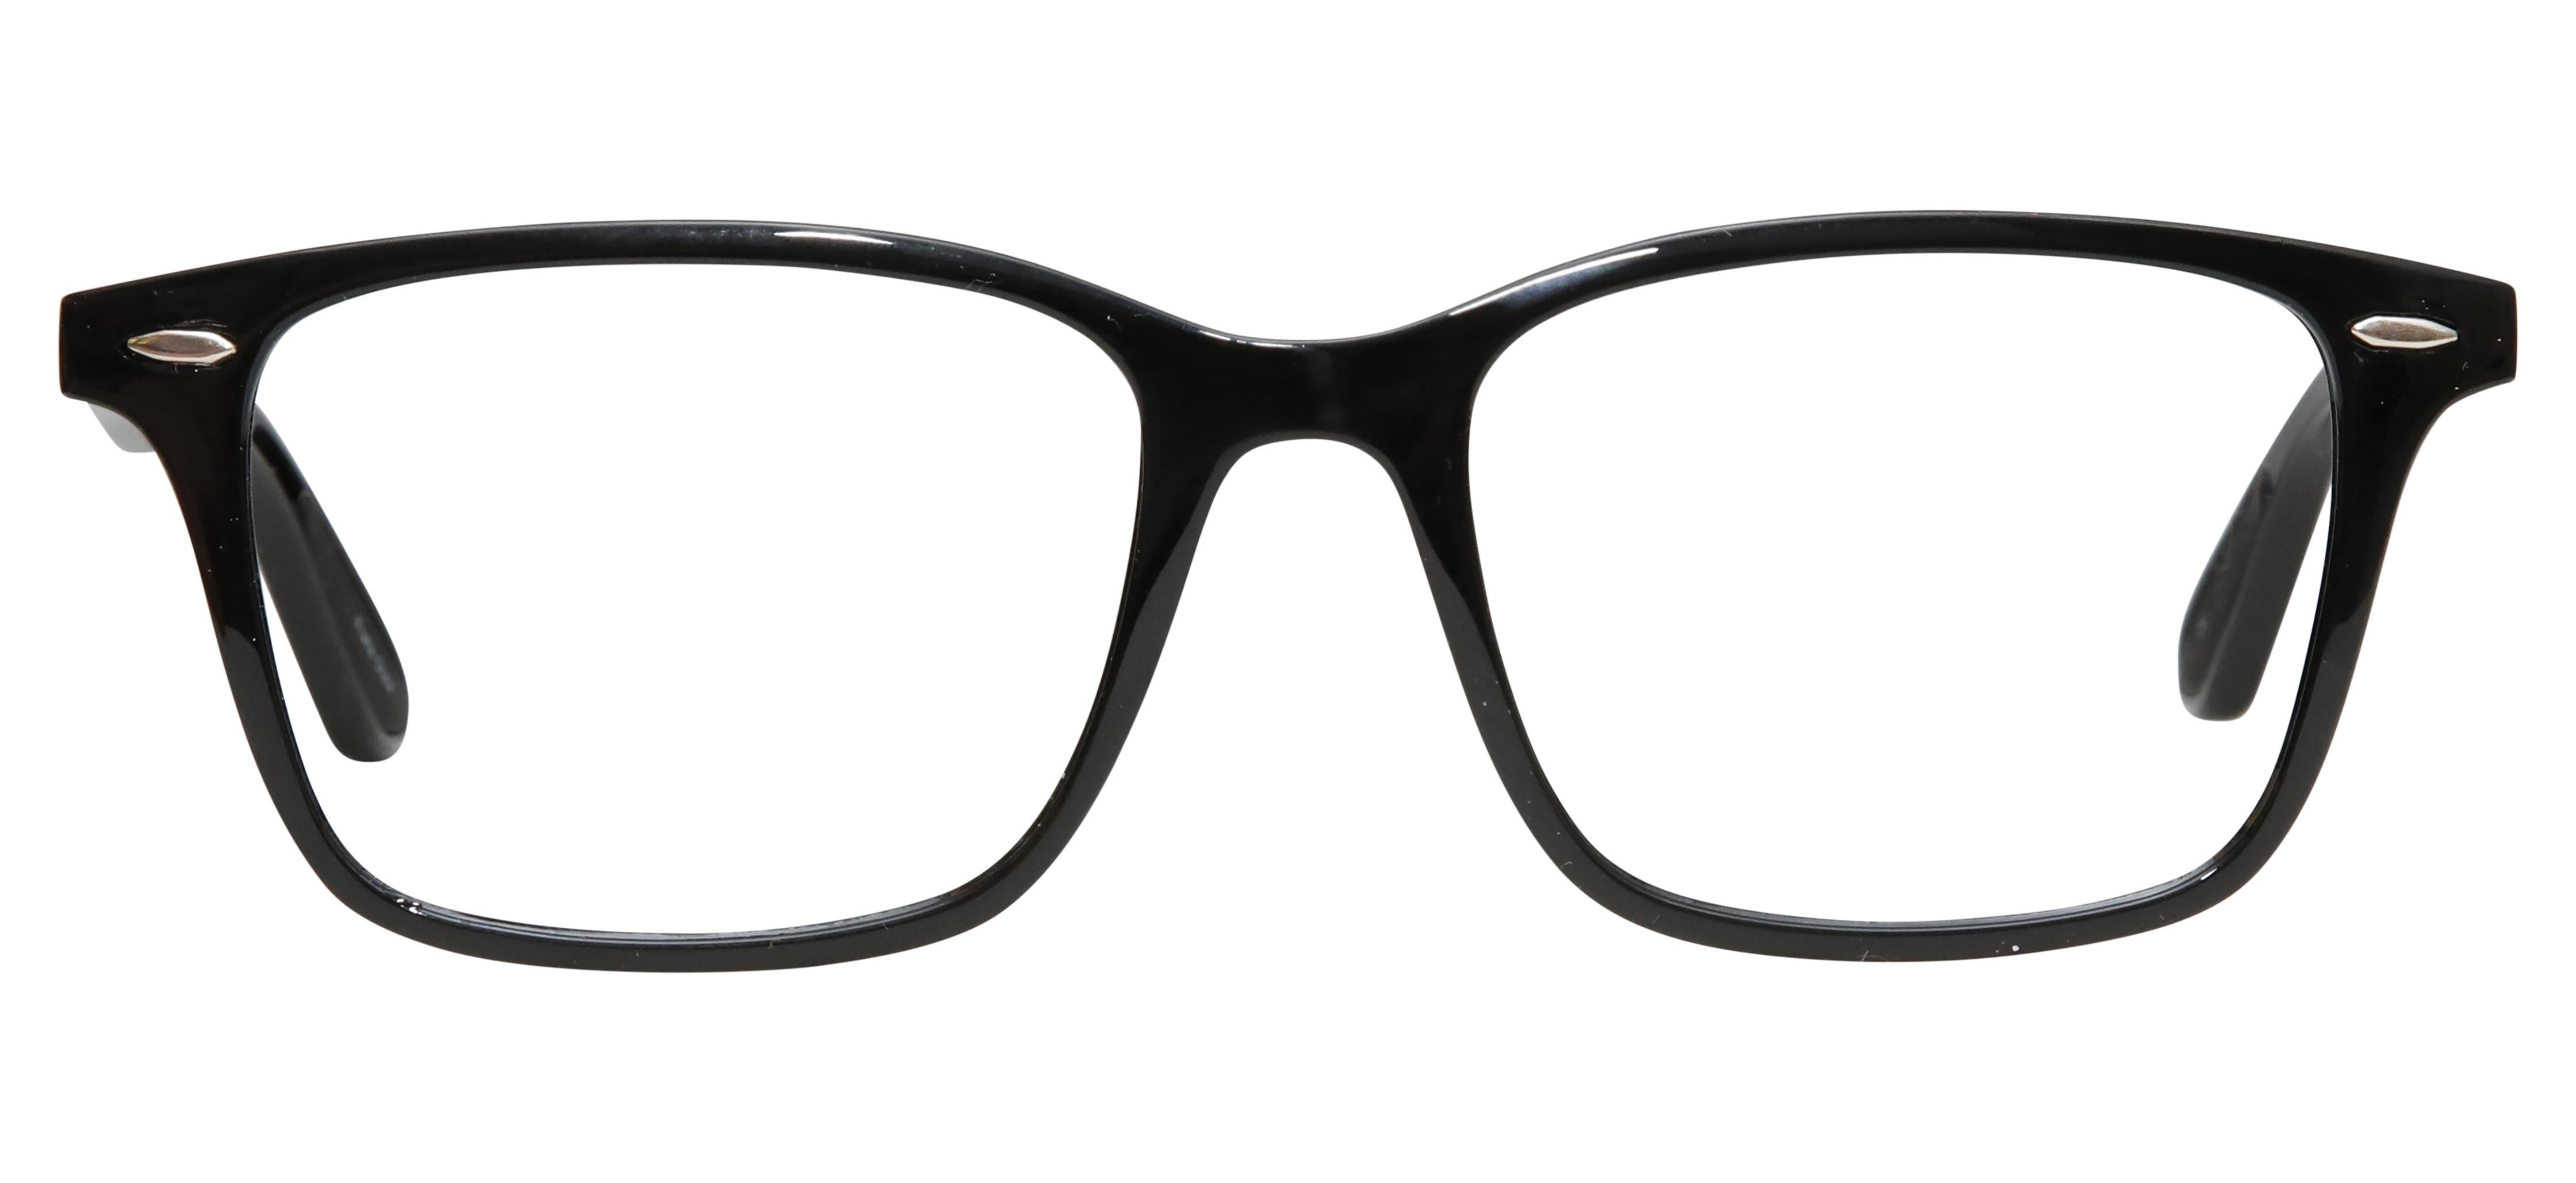 Blue Light Blocking Glasses Square Full Rim 201961 Eyeglasses Includes Blue Light Blocking Lenses